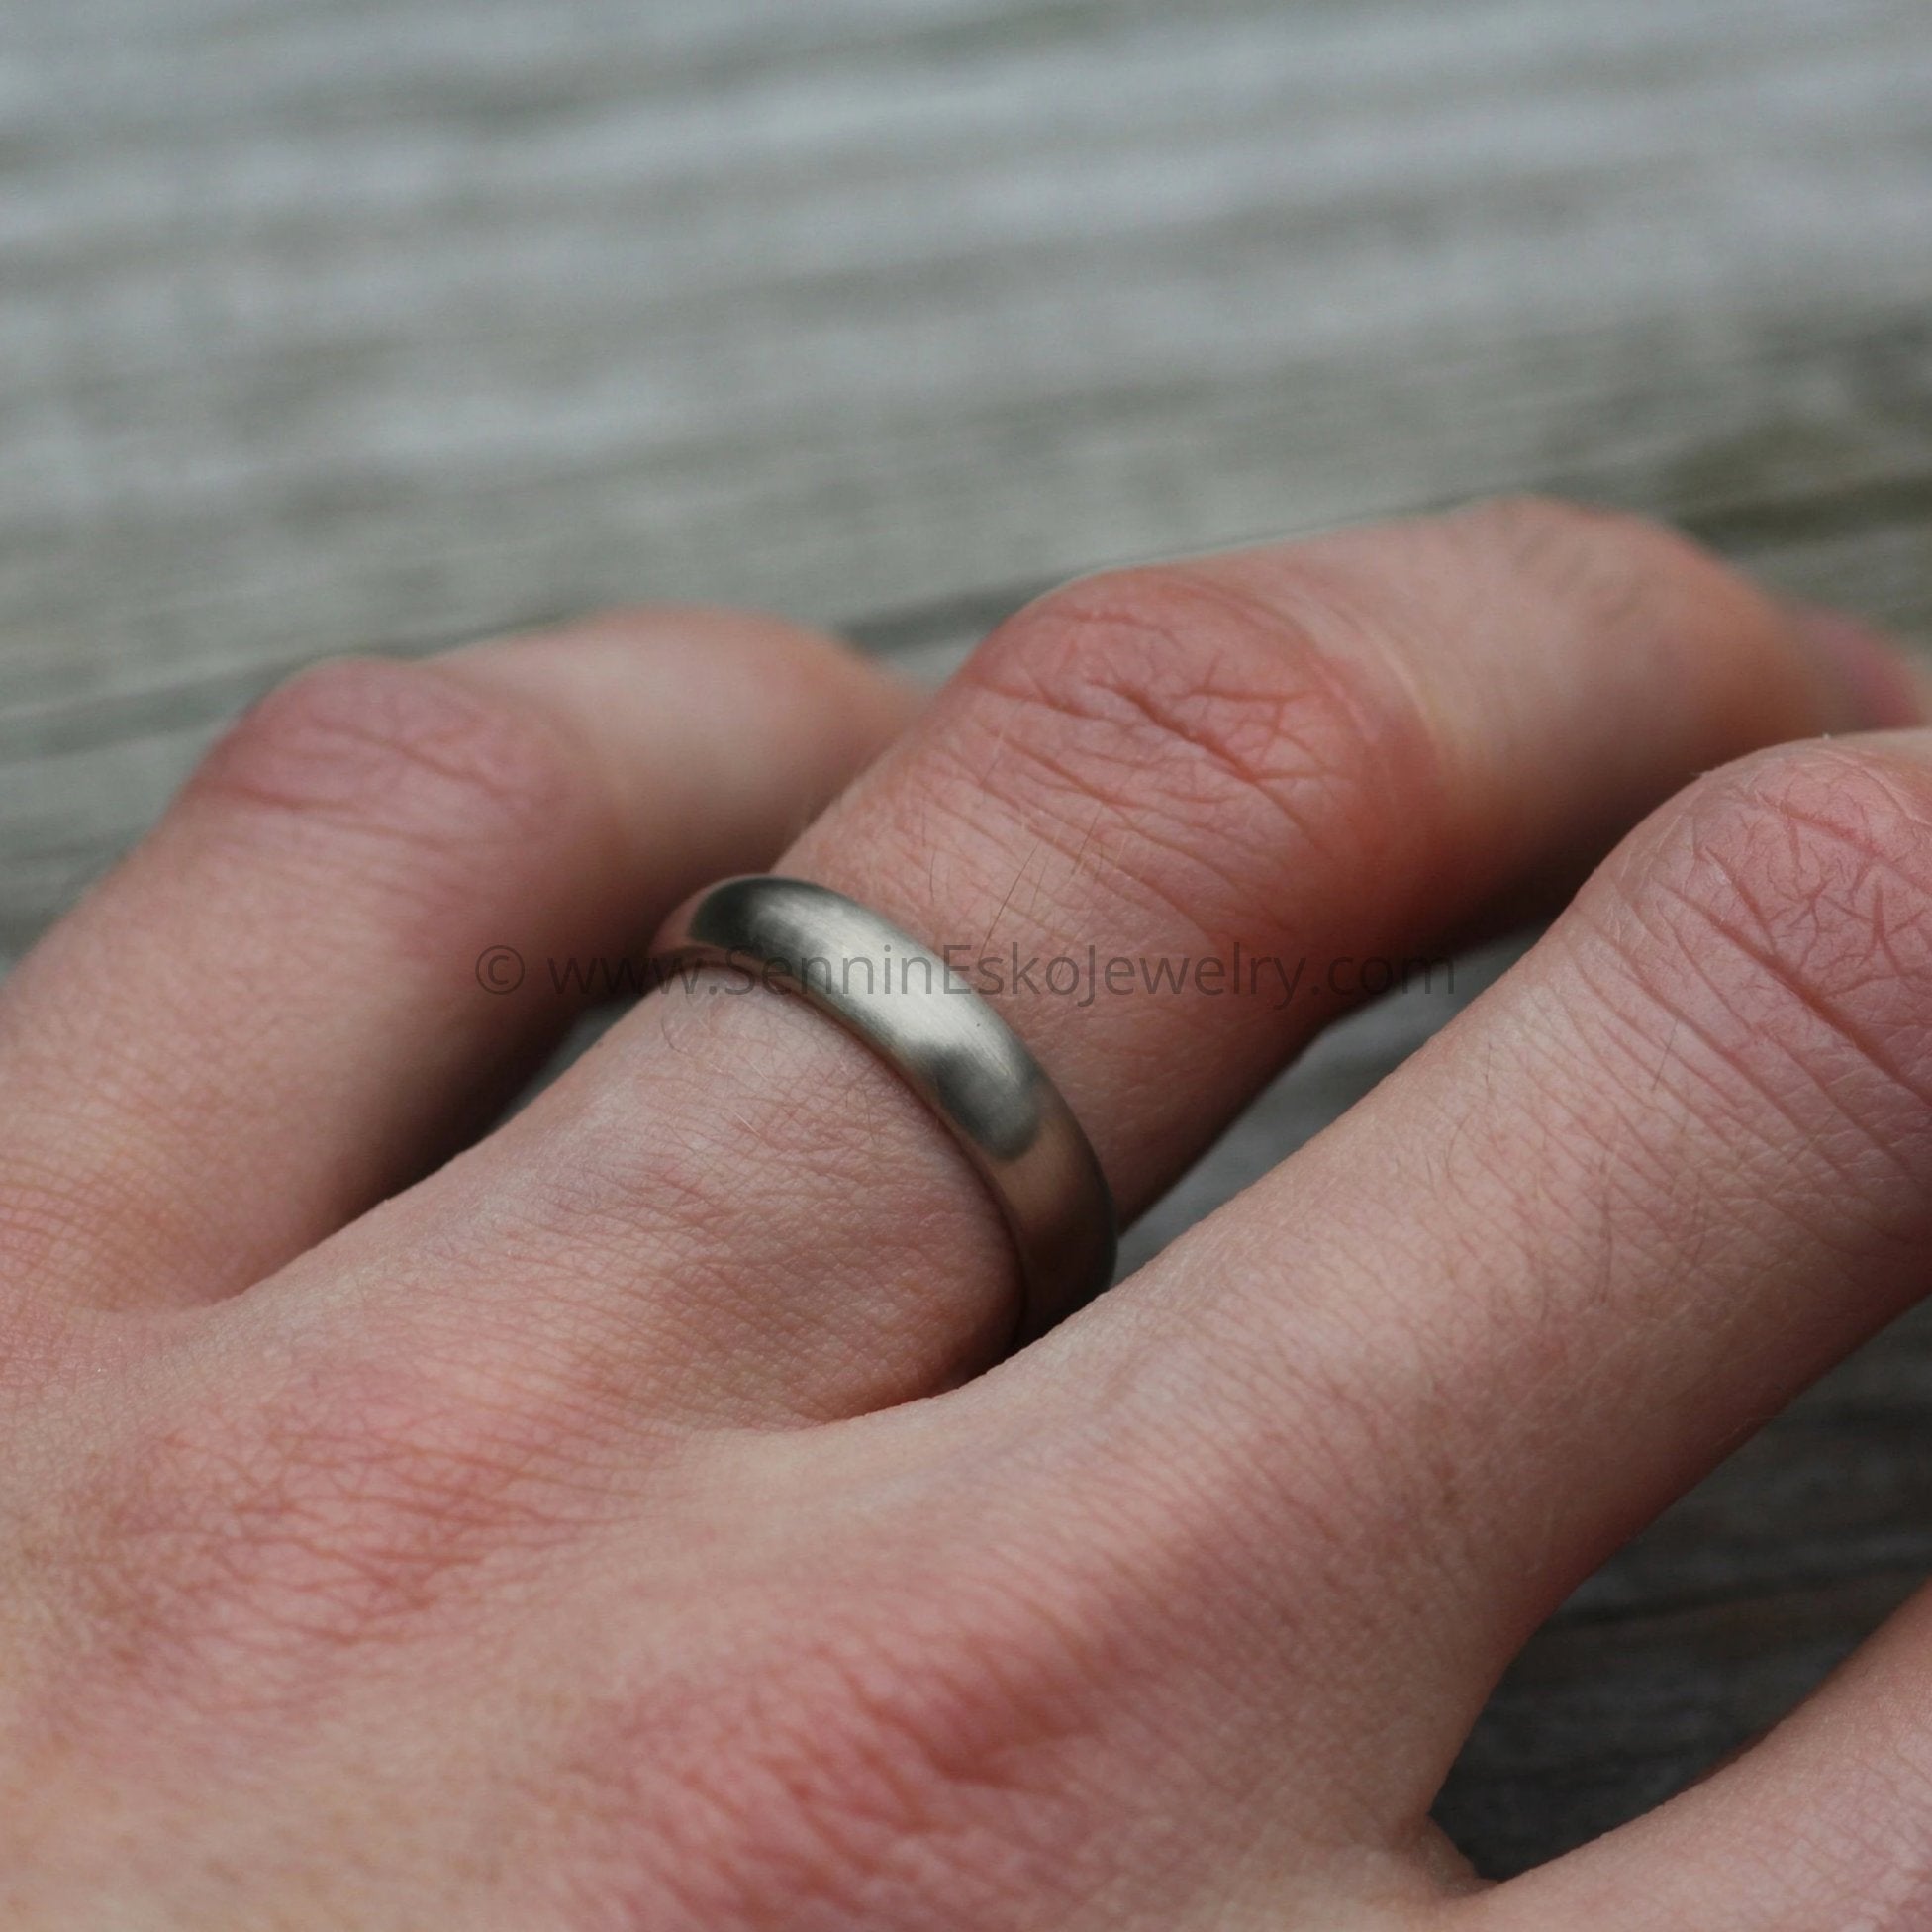 Solid Palladium 6mm Comfort Fit Wedding Band Ring Classic Plain Traditional  - Size 10.5 | Amazon.com